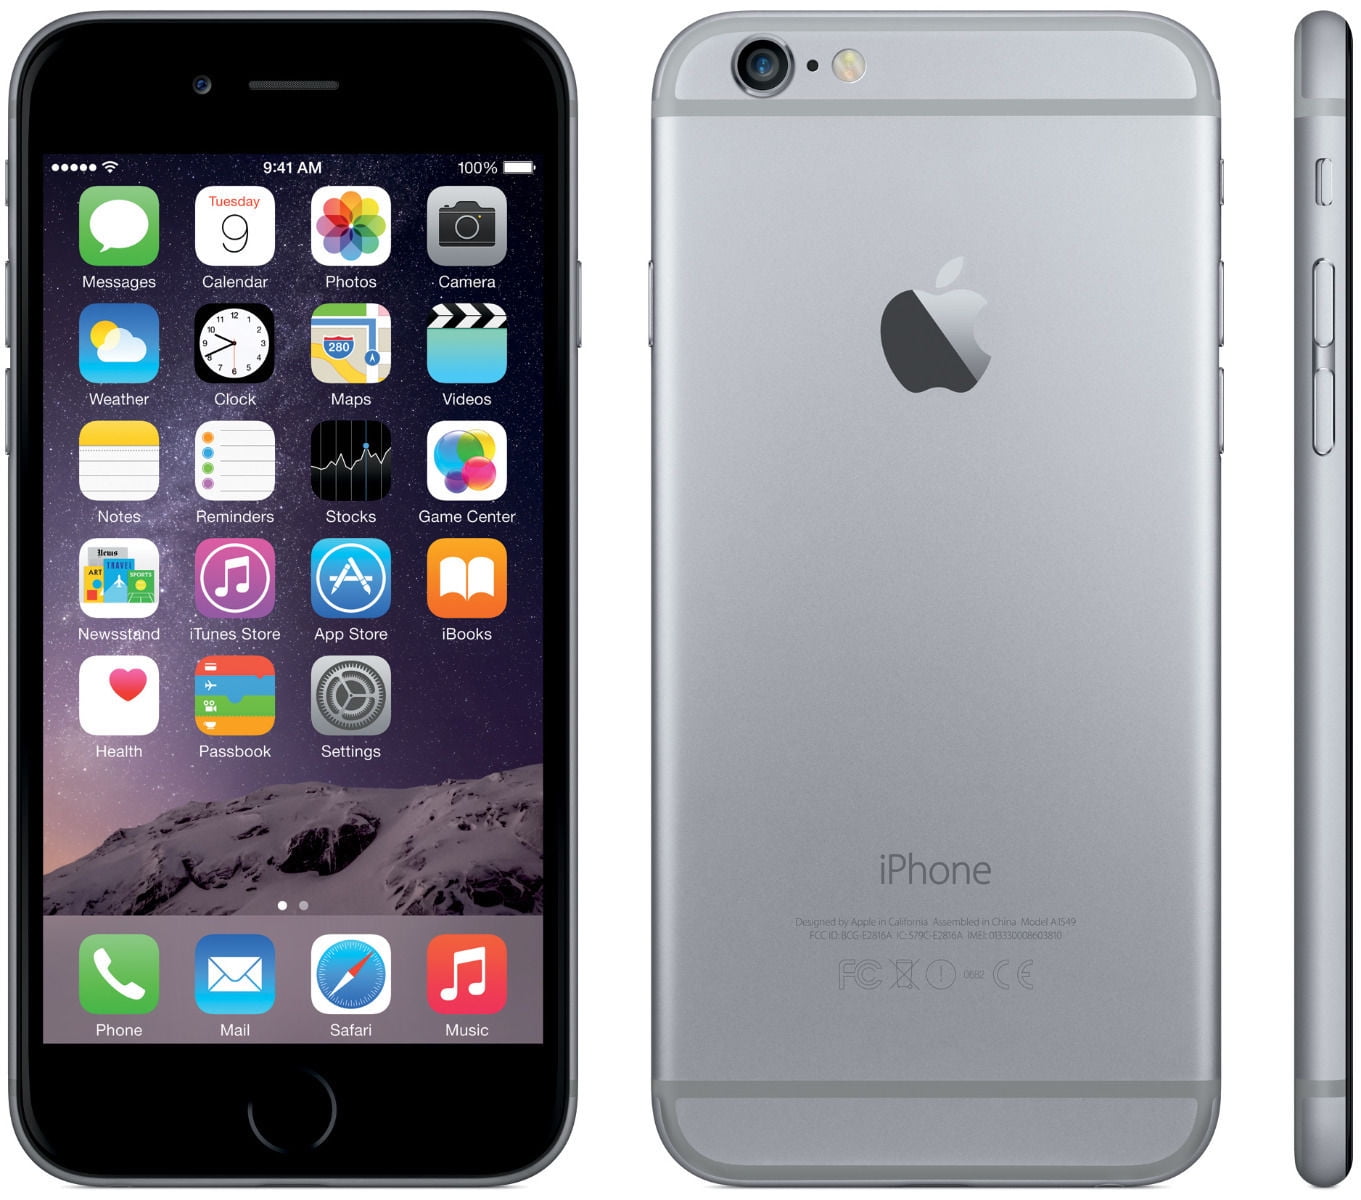 Seller Refurbished Apple iPhone 6 Plus 64GB Unlocked GSM iOS Smartphone Black Silver Gold (Space Gray/Black)